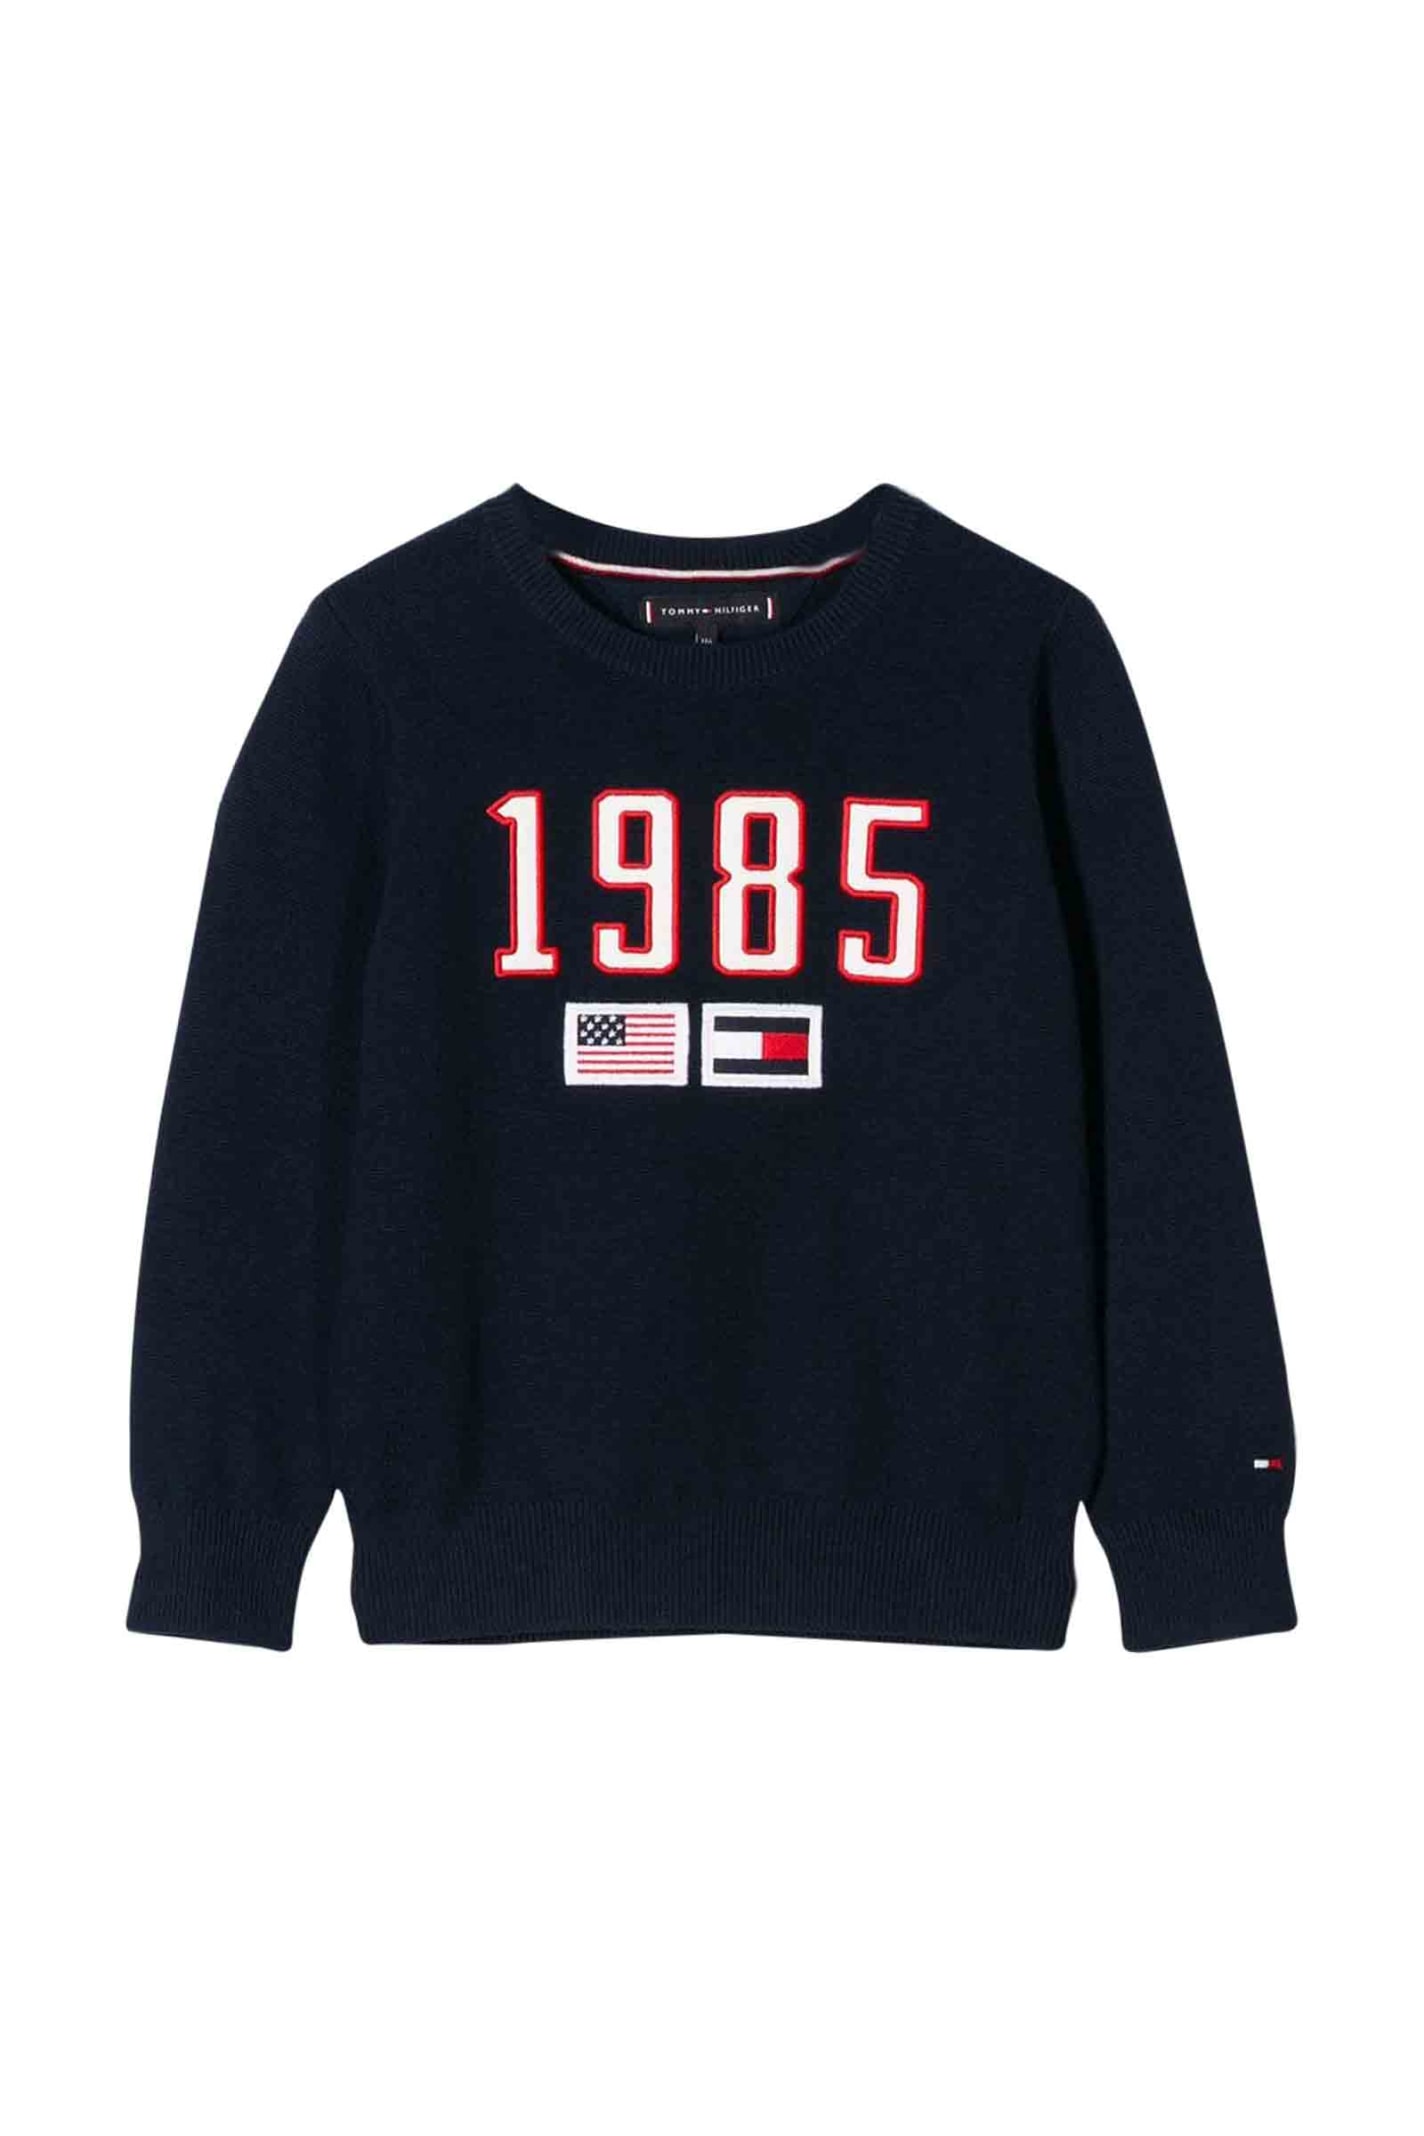 tommy hilfiger 1985 sweater